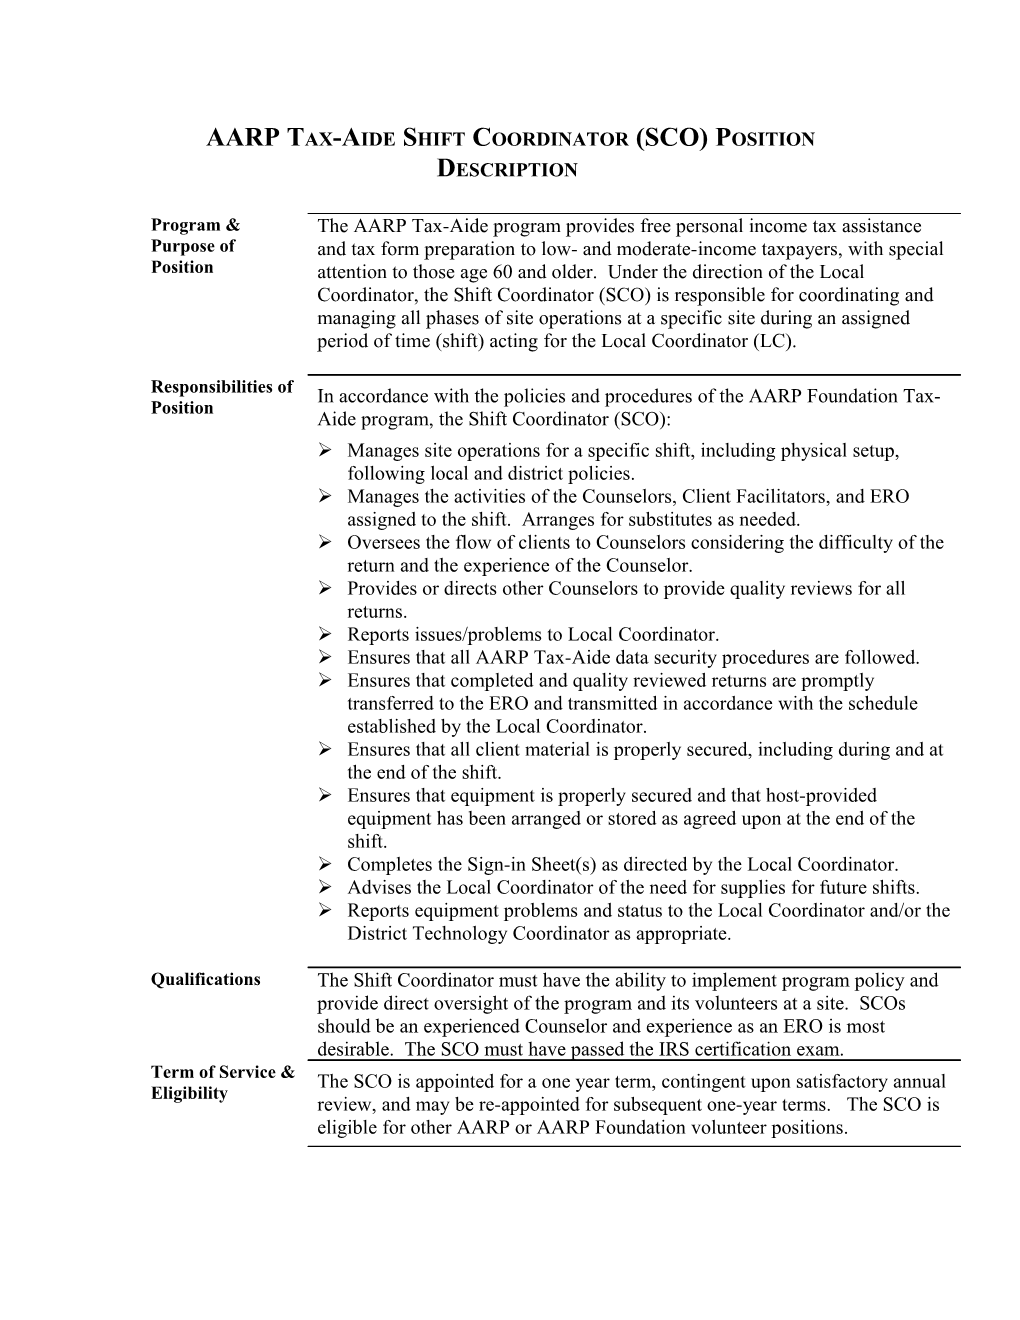 AARP Tax-Aide Shift Coordinator (SCO) Position Description